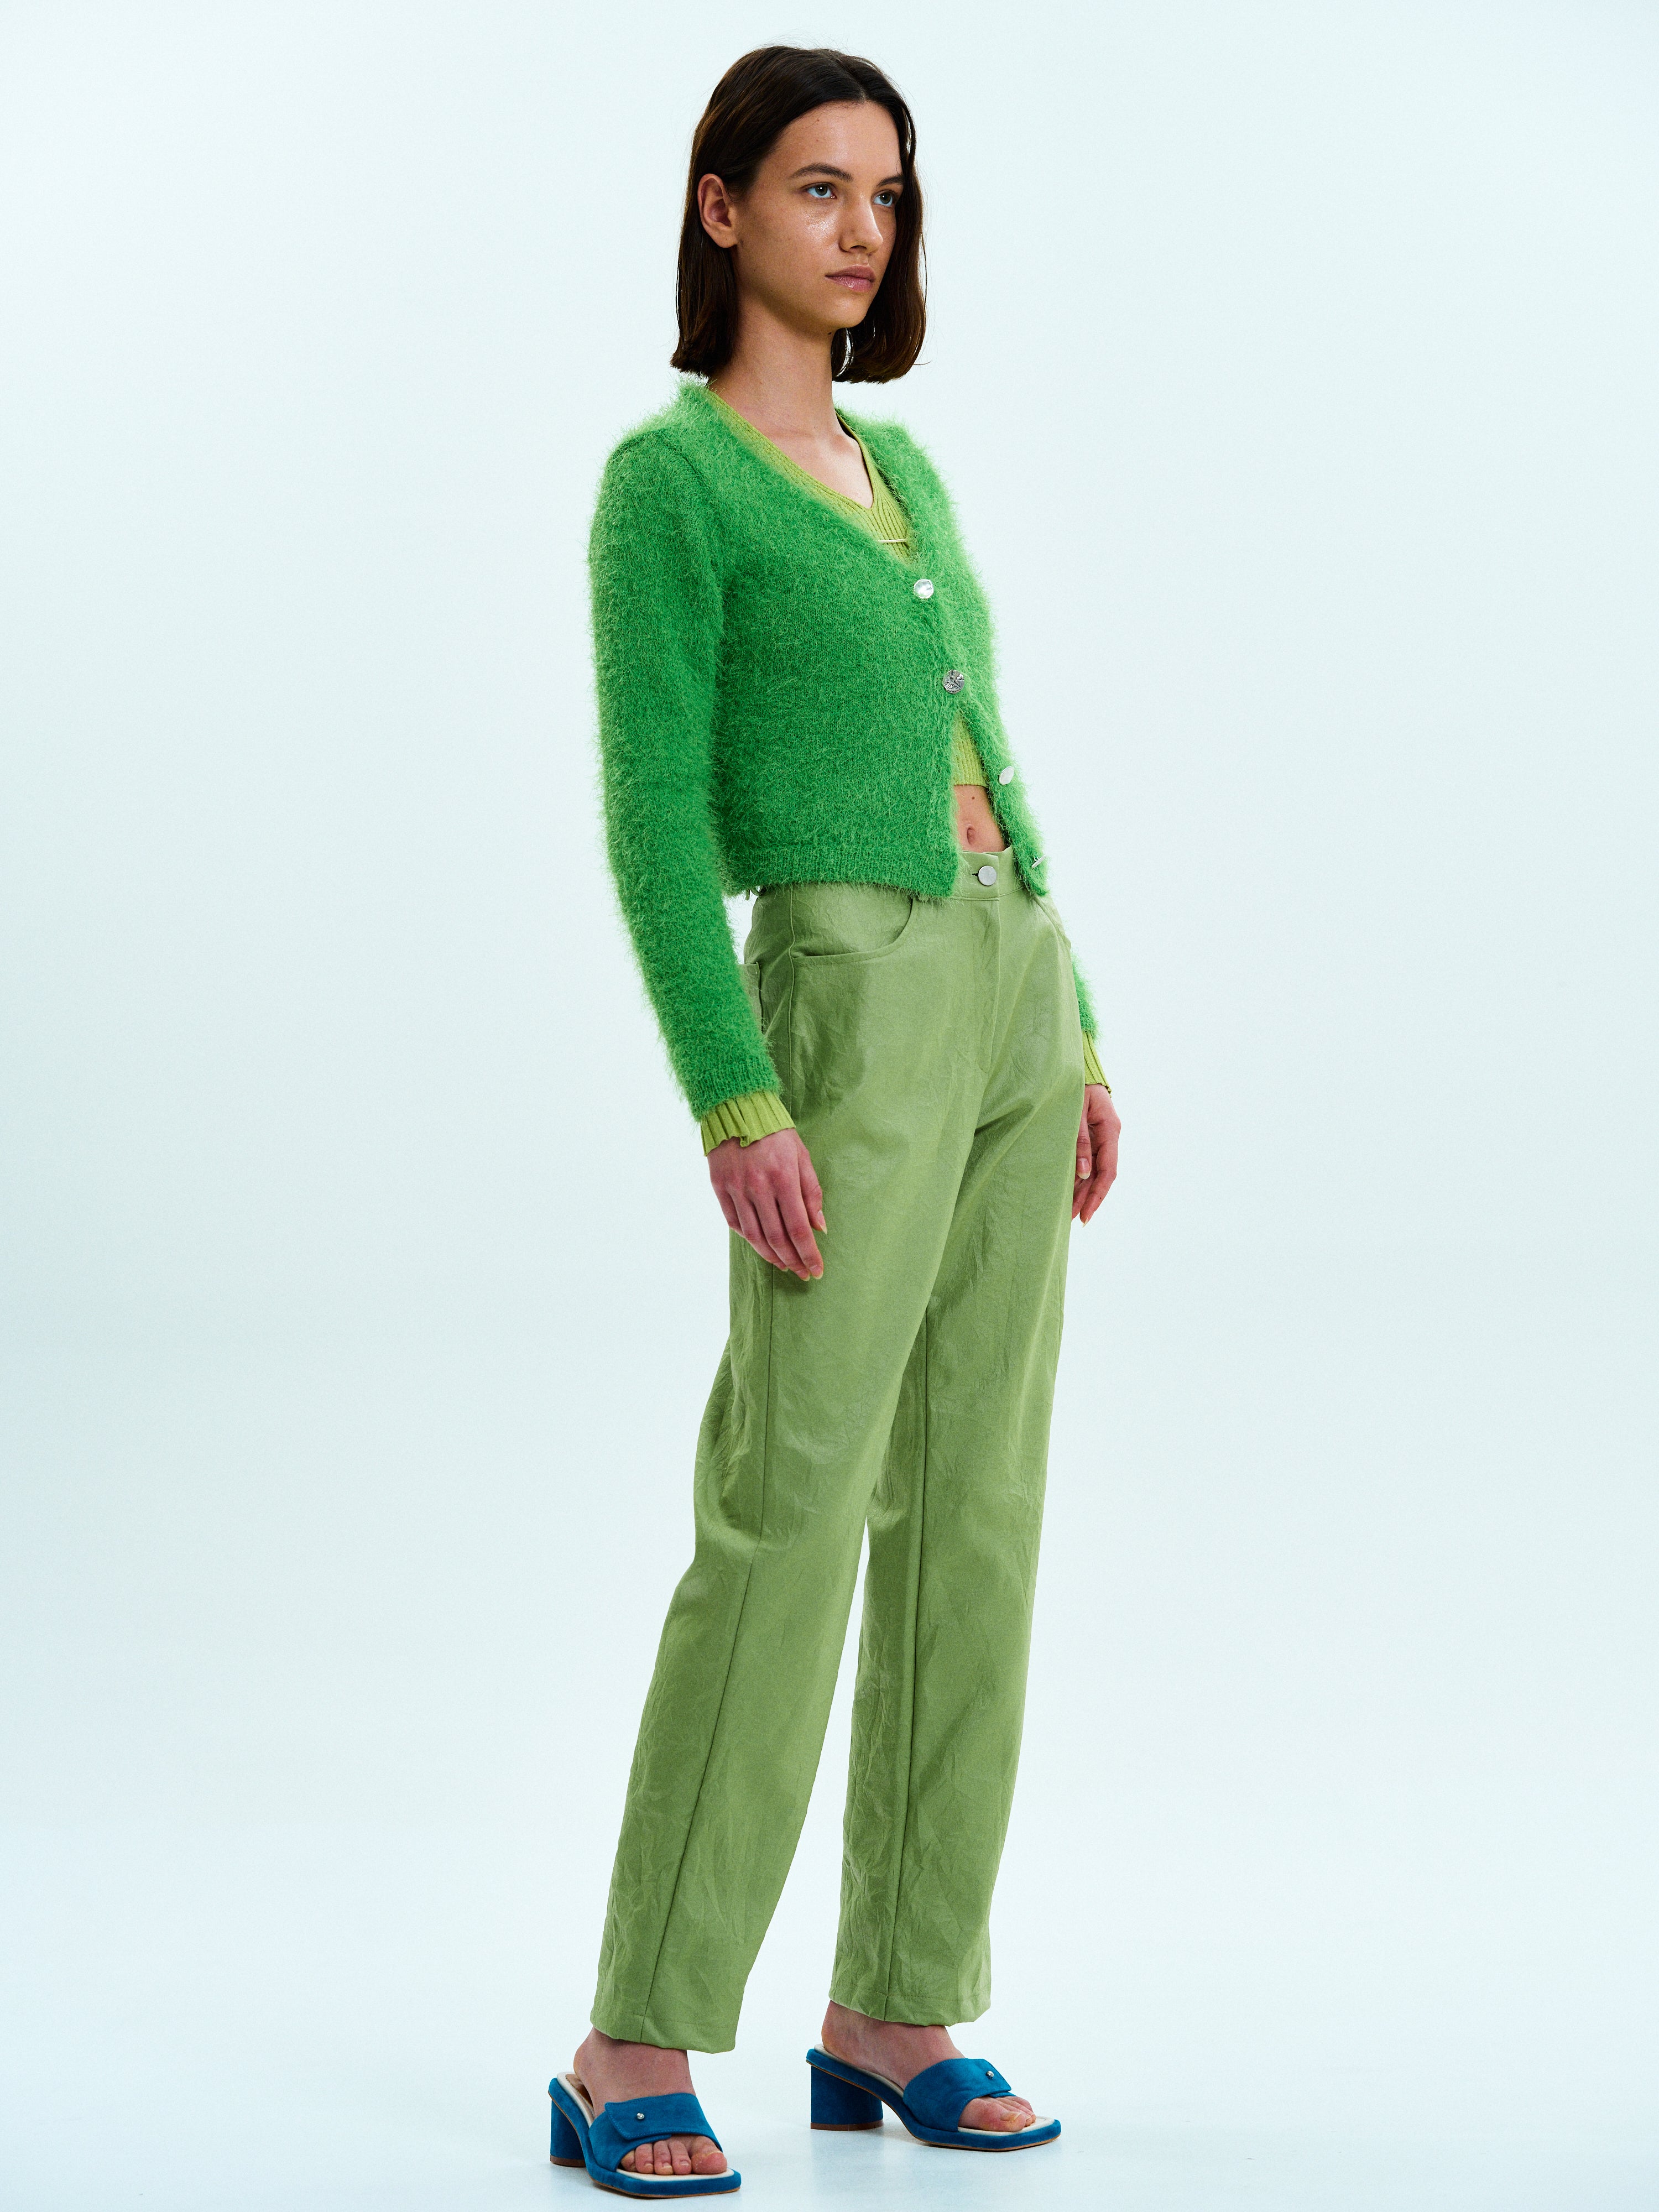 yourmle shaggy knit cardigan green-